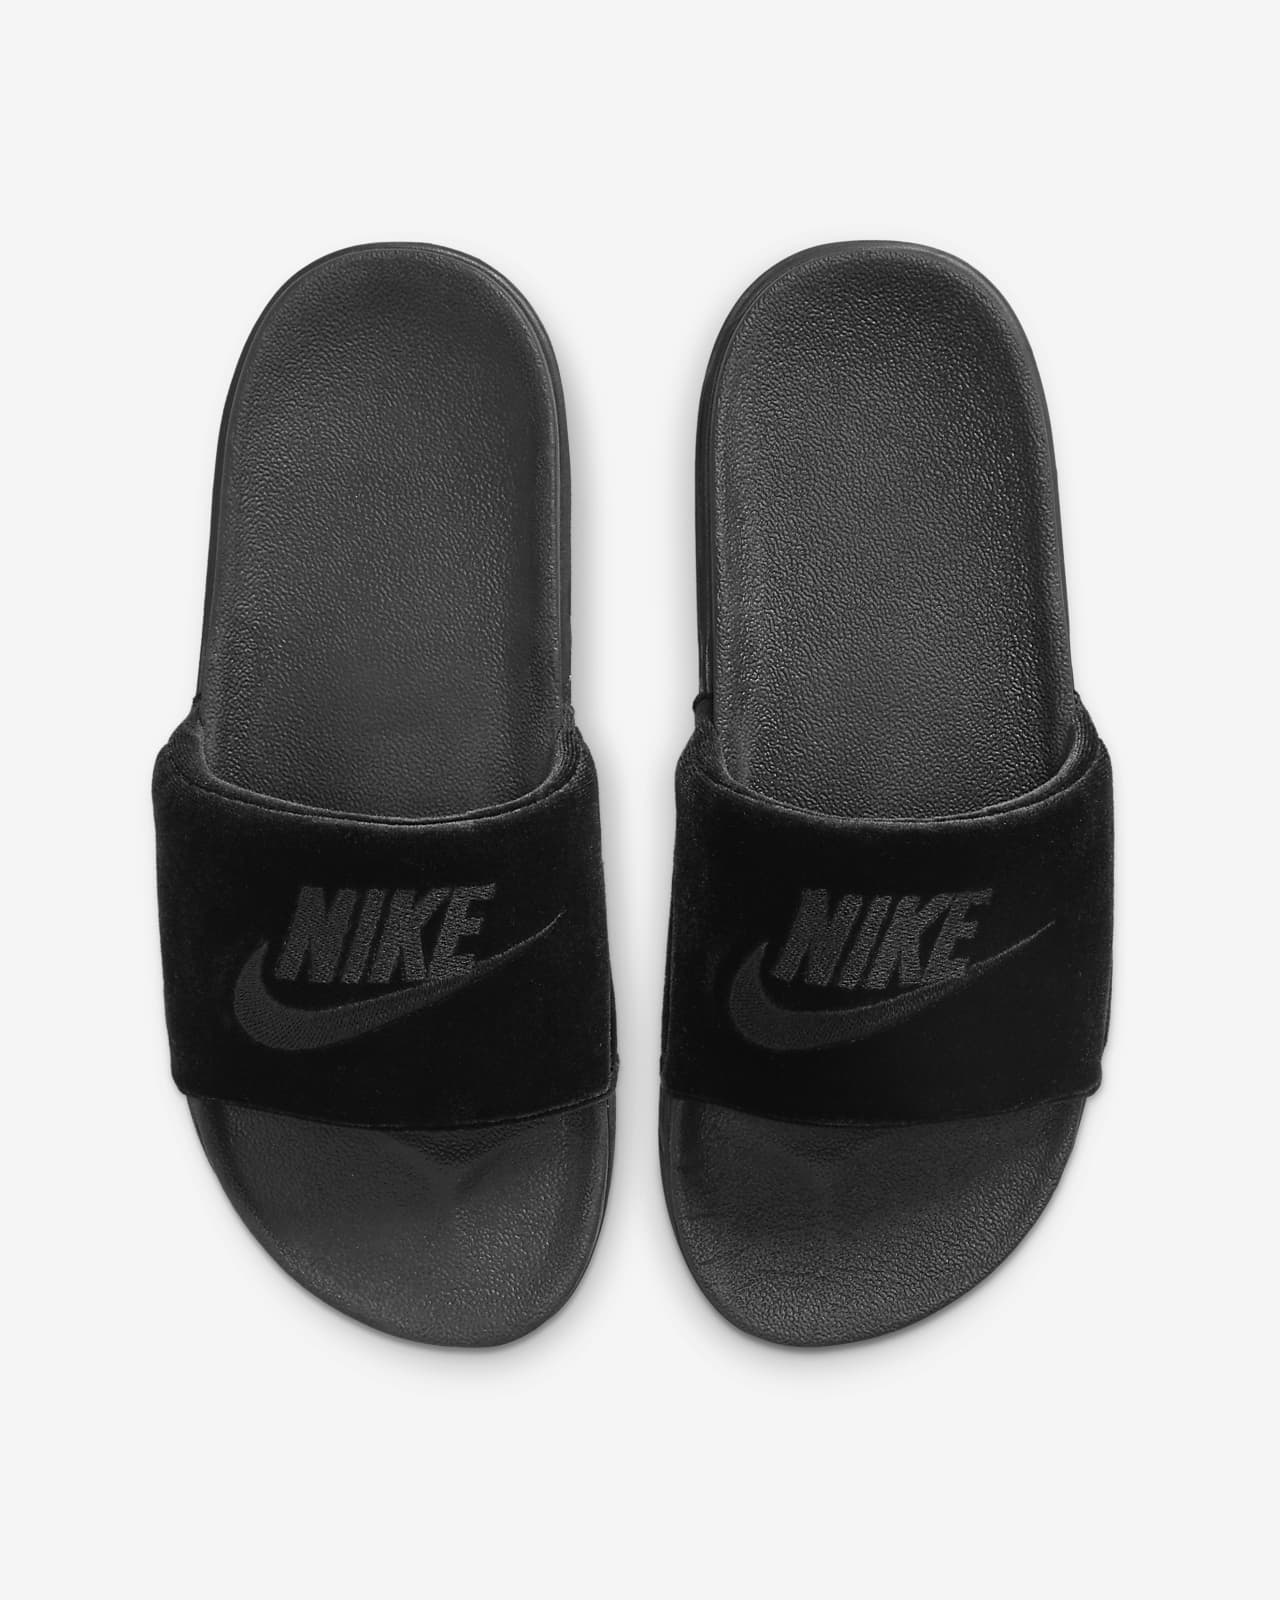 Nike Offcourt SE Black/Black Women's Slide Shoes, Size: 7